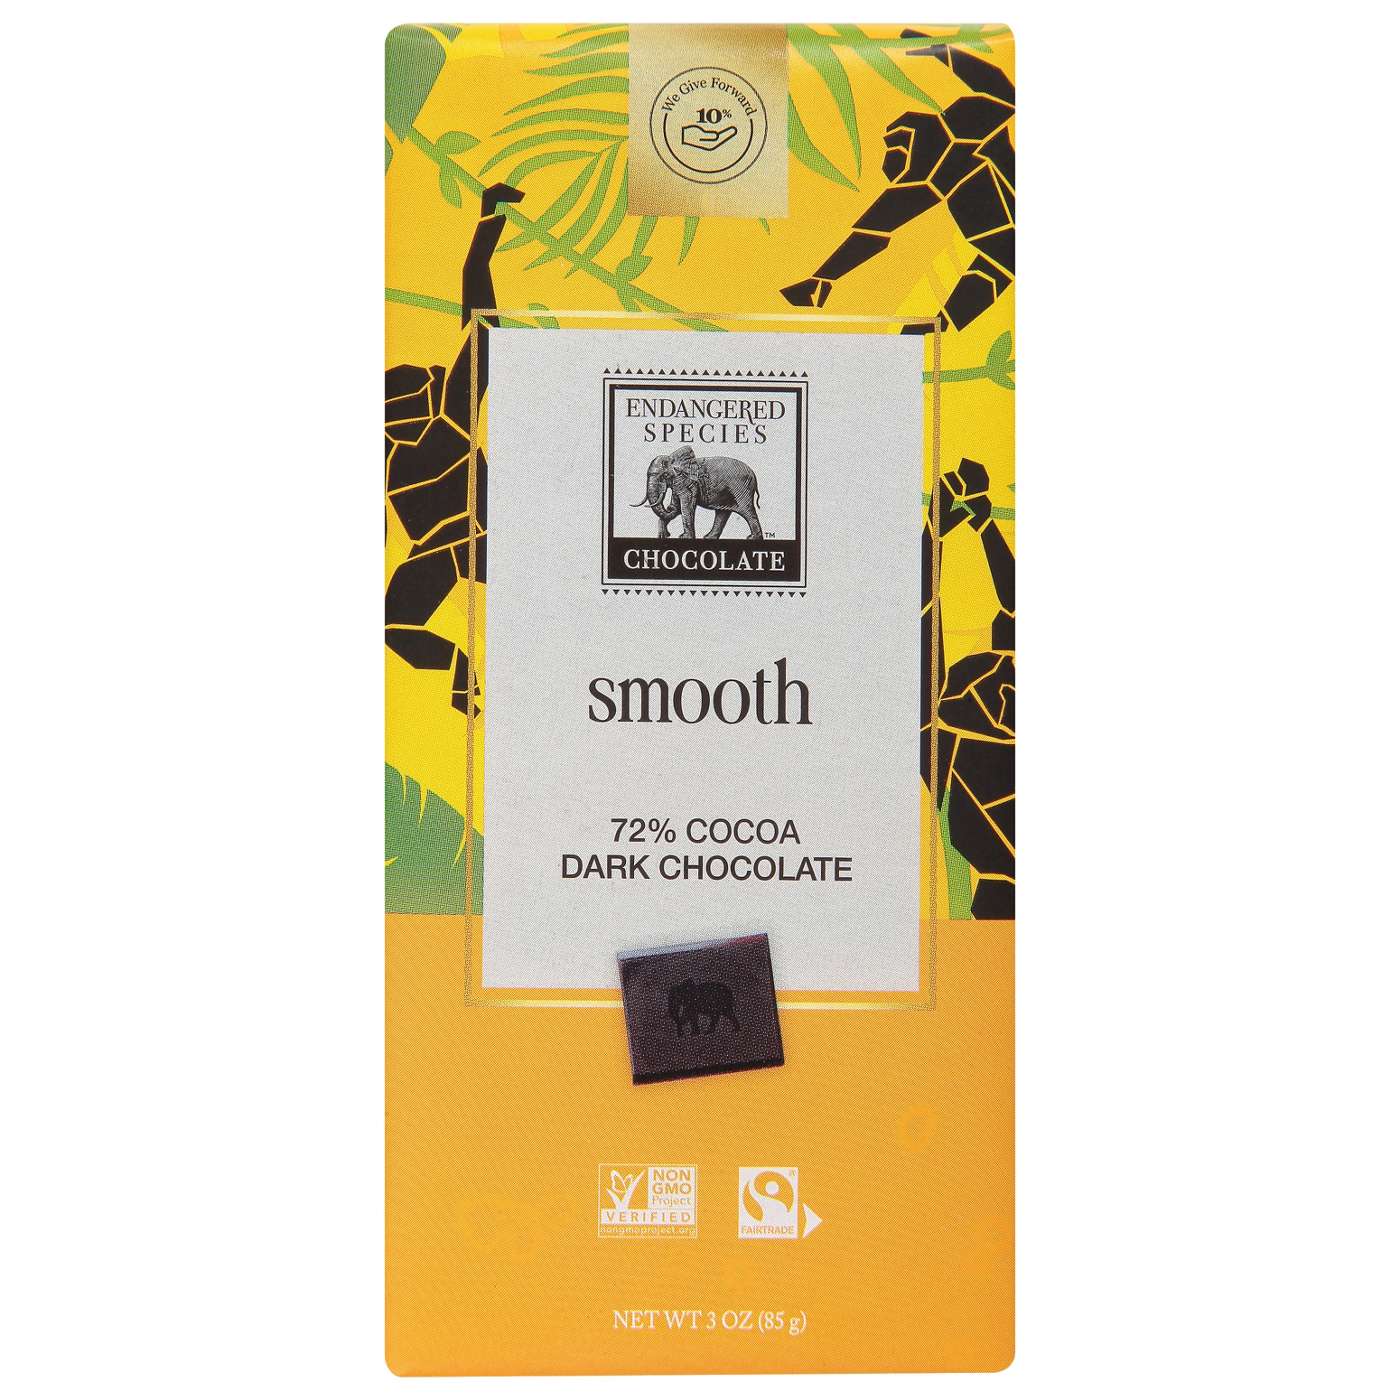 Endangered Species Smooth Dark Chocolate Bar; image 1 of 2